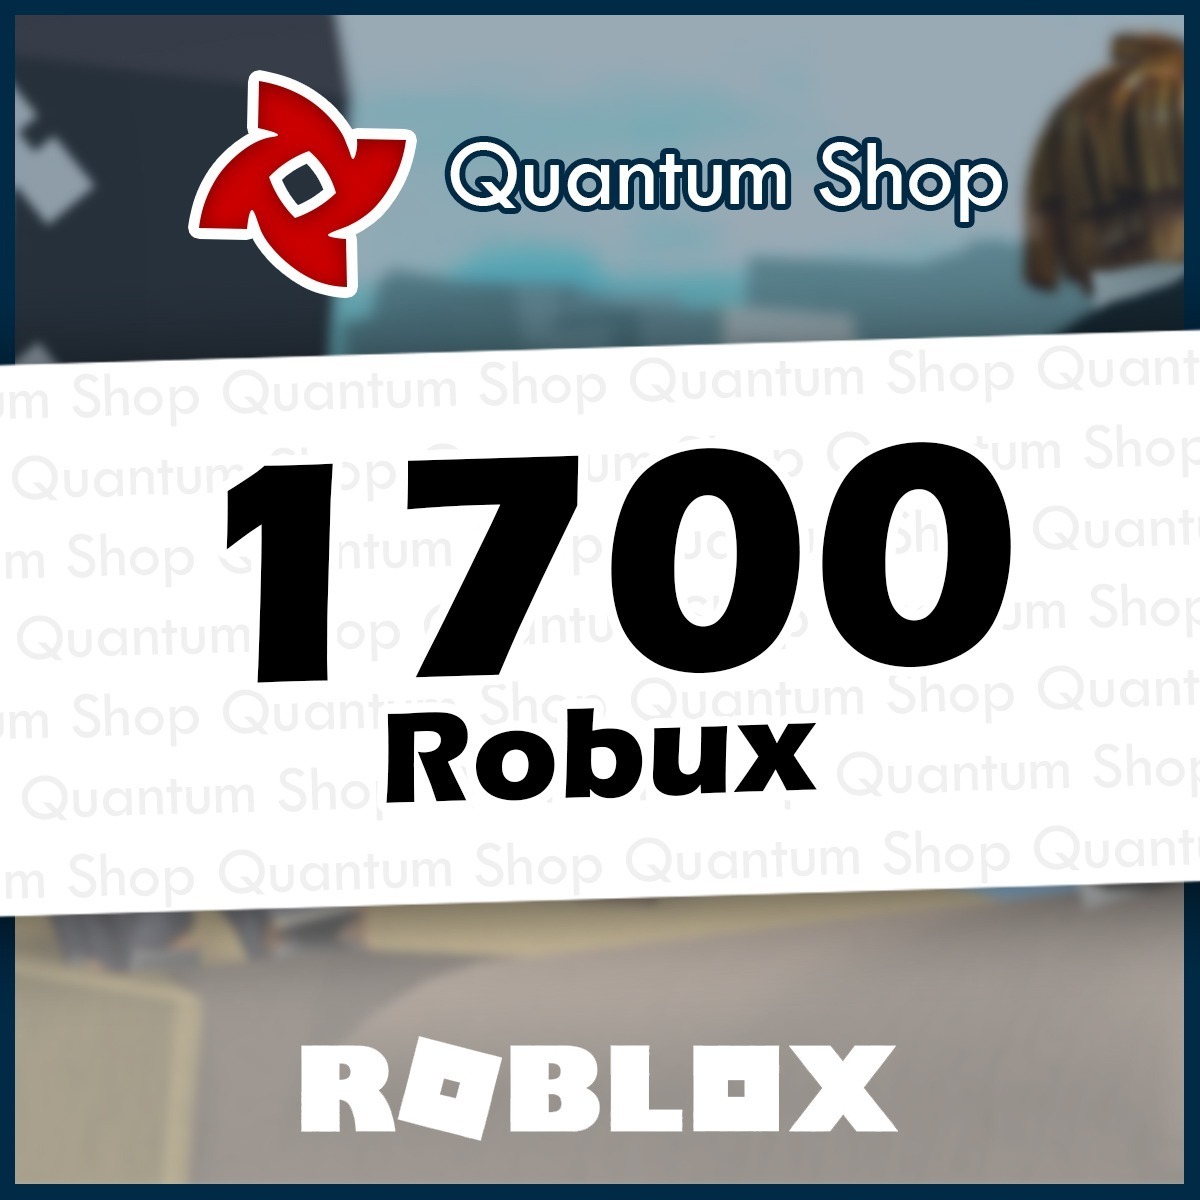 Robux Gratis Sin Verificar Free Robux Hacks No Human Verification 2019 - como conseguir robux gratis roblox roar roblox 800 robux